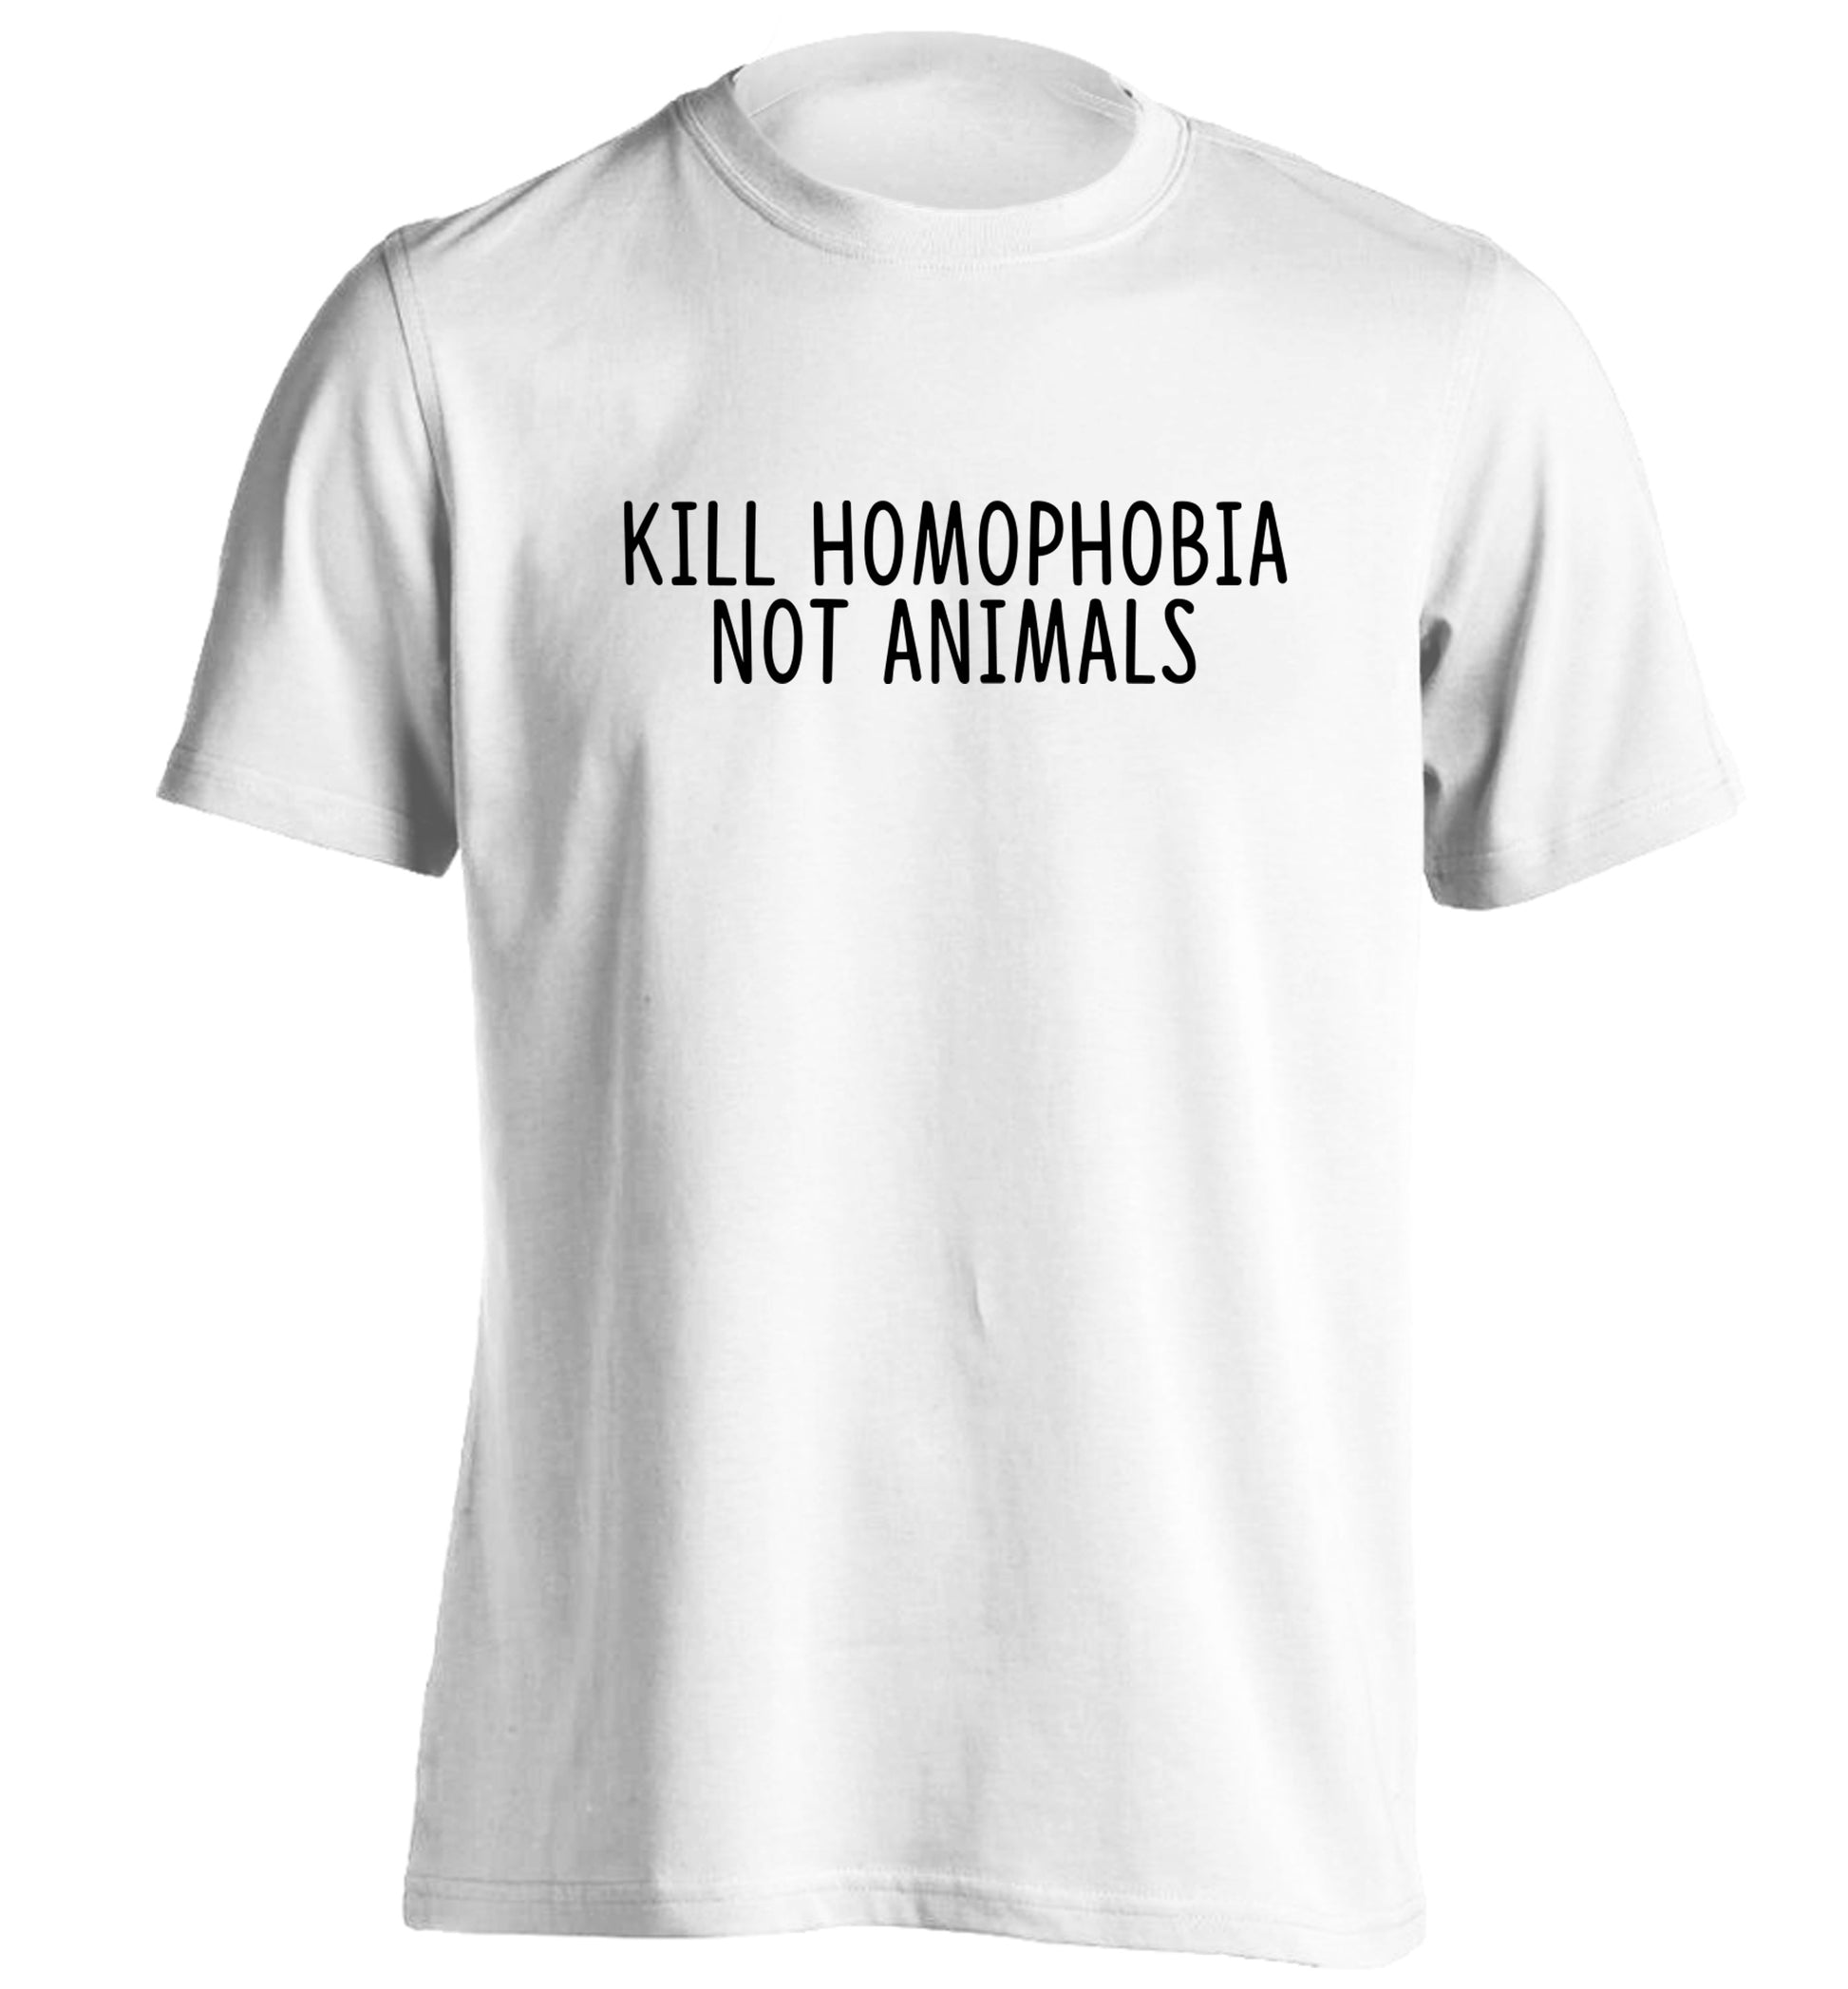 Kill Homophobia Not Animals adults unisex white Tshirt 2XL